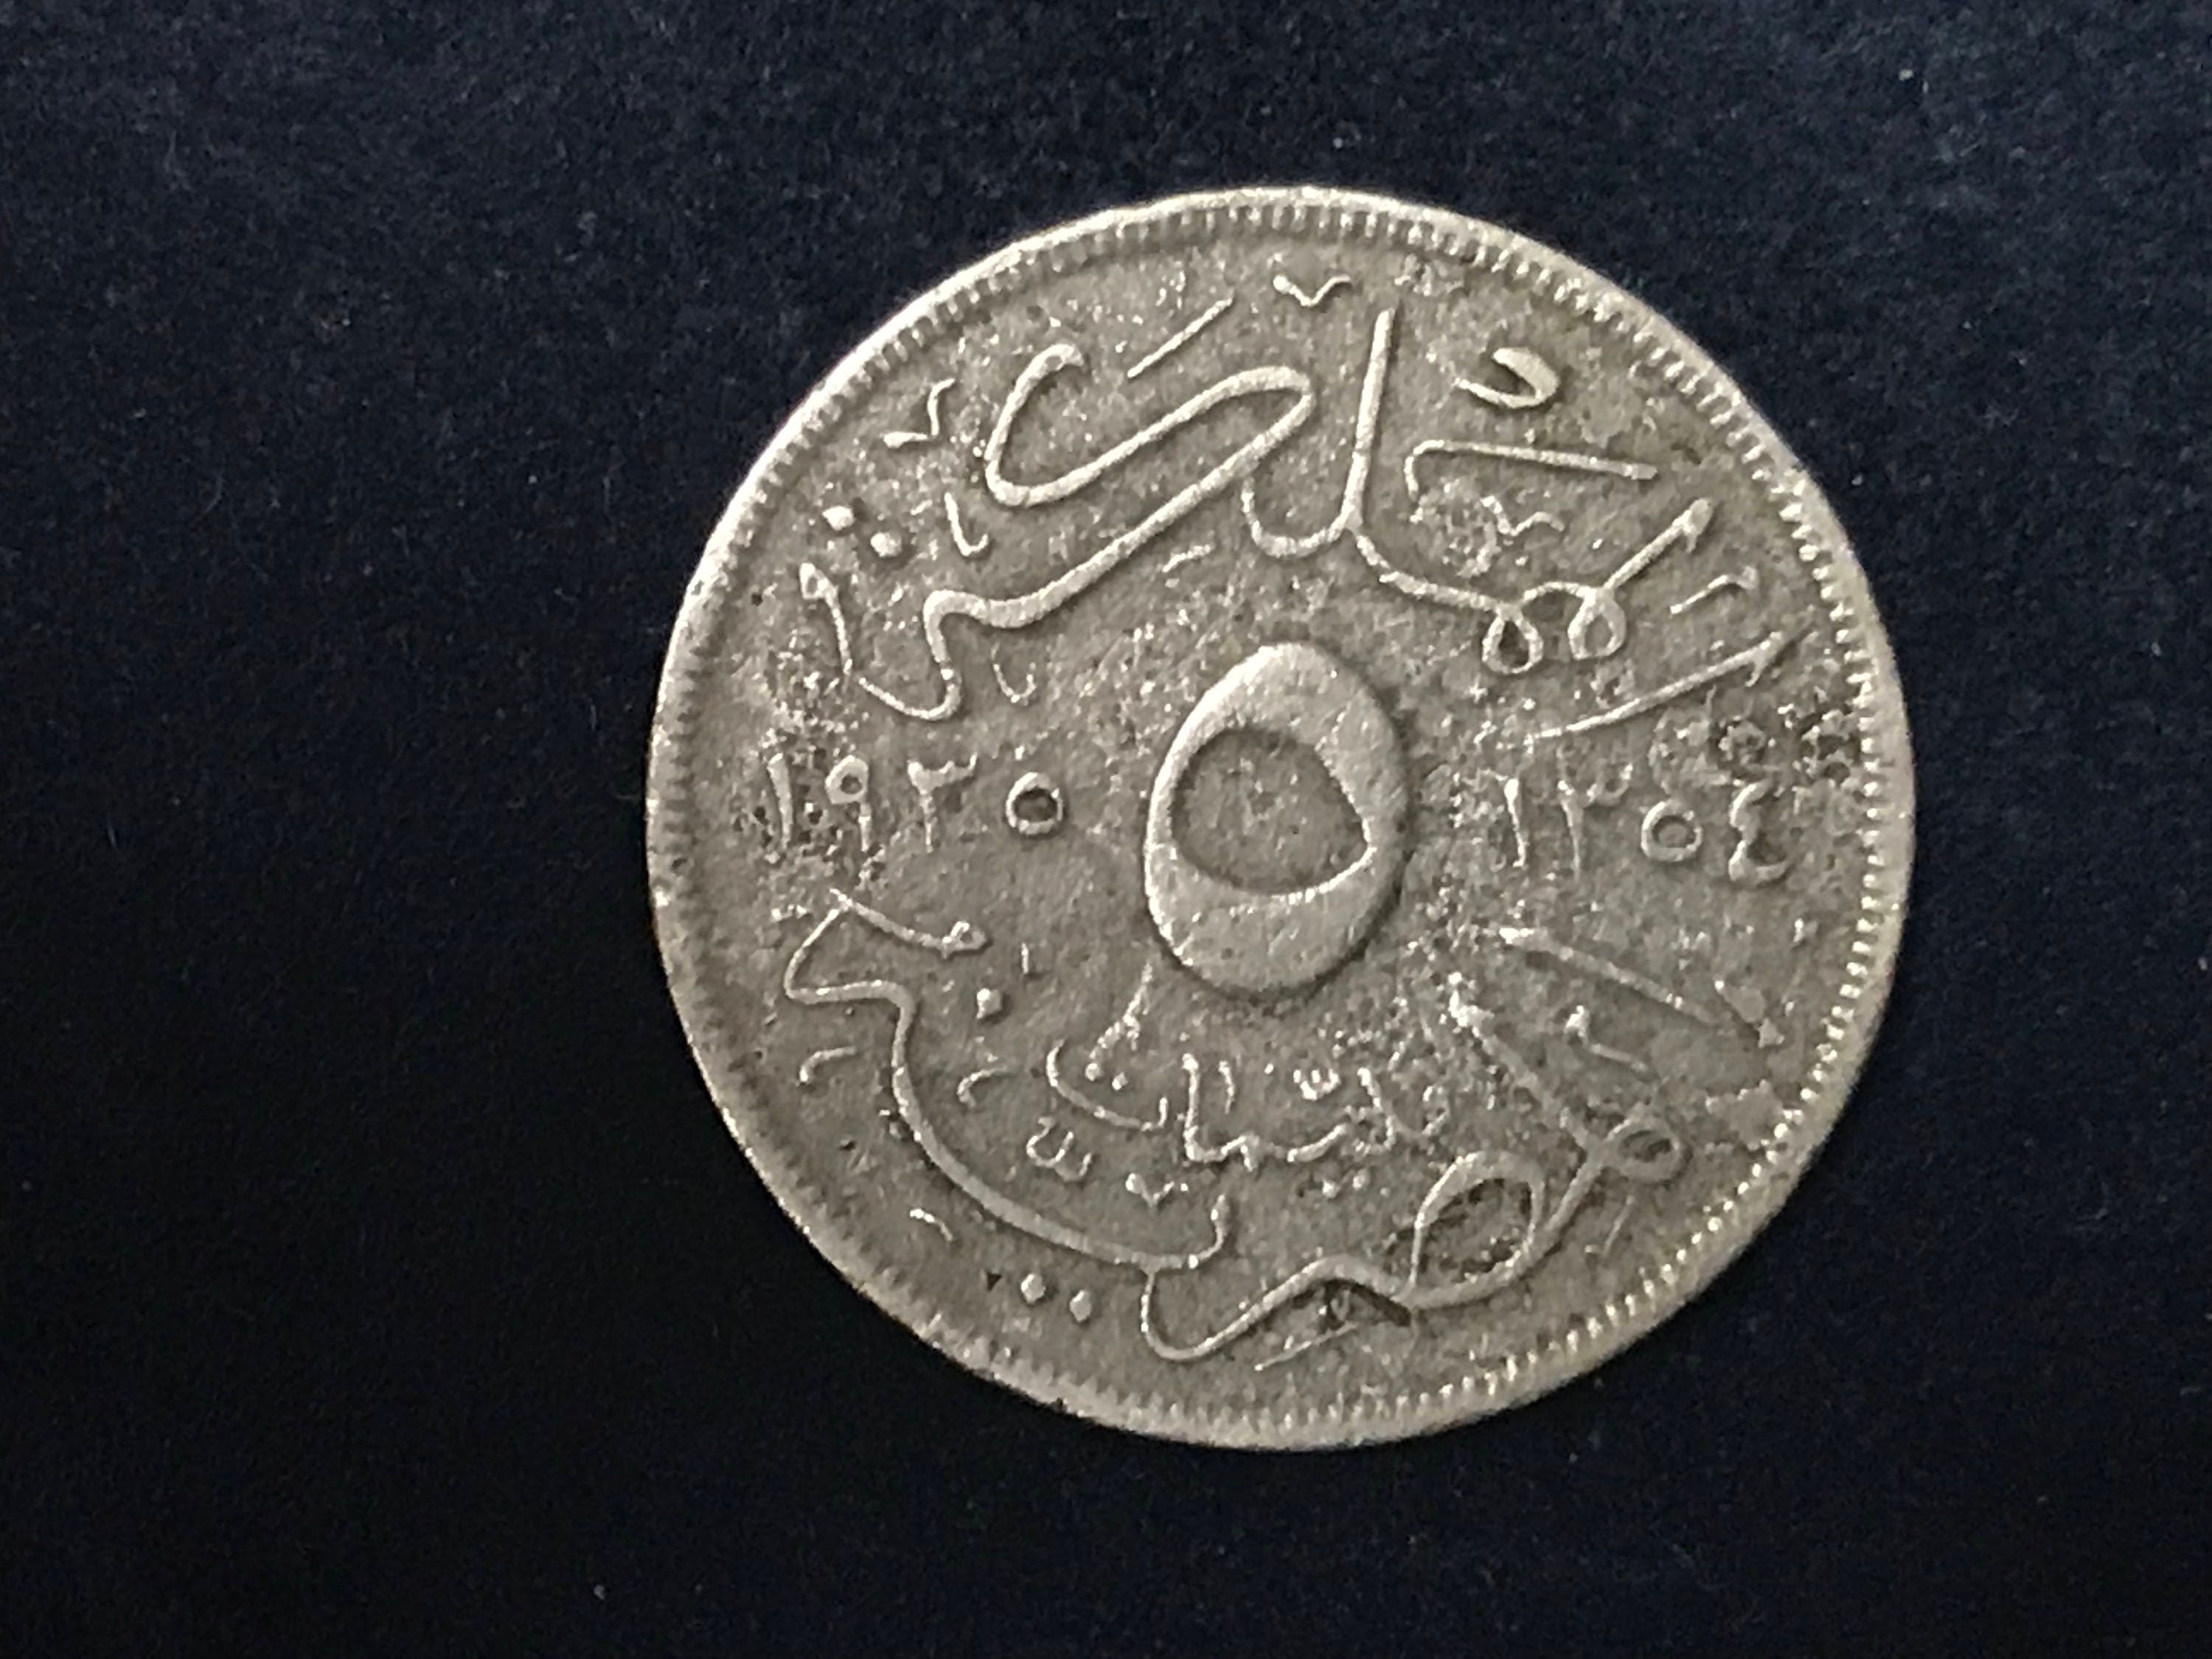 Egyptian 1935 5 milliemes coin | Etsy